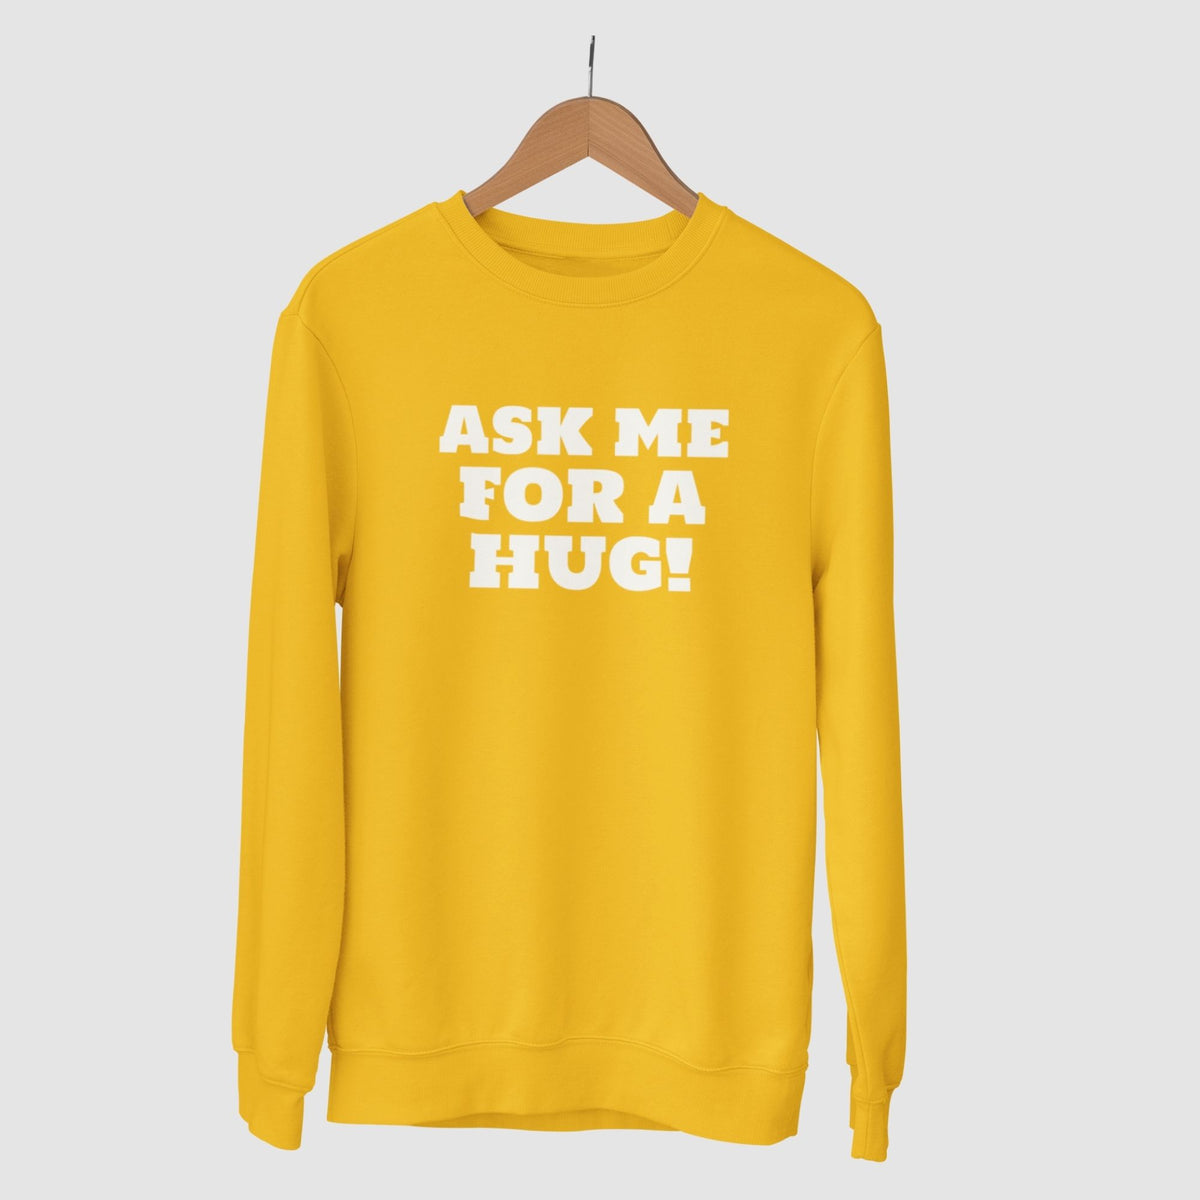 ask-me-for-a-hug-cotton-printed-unisex-golden-yellow-sweatshirt-gogirgit-com